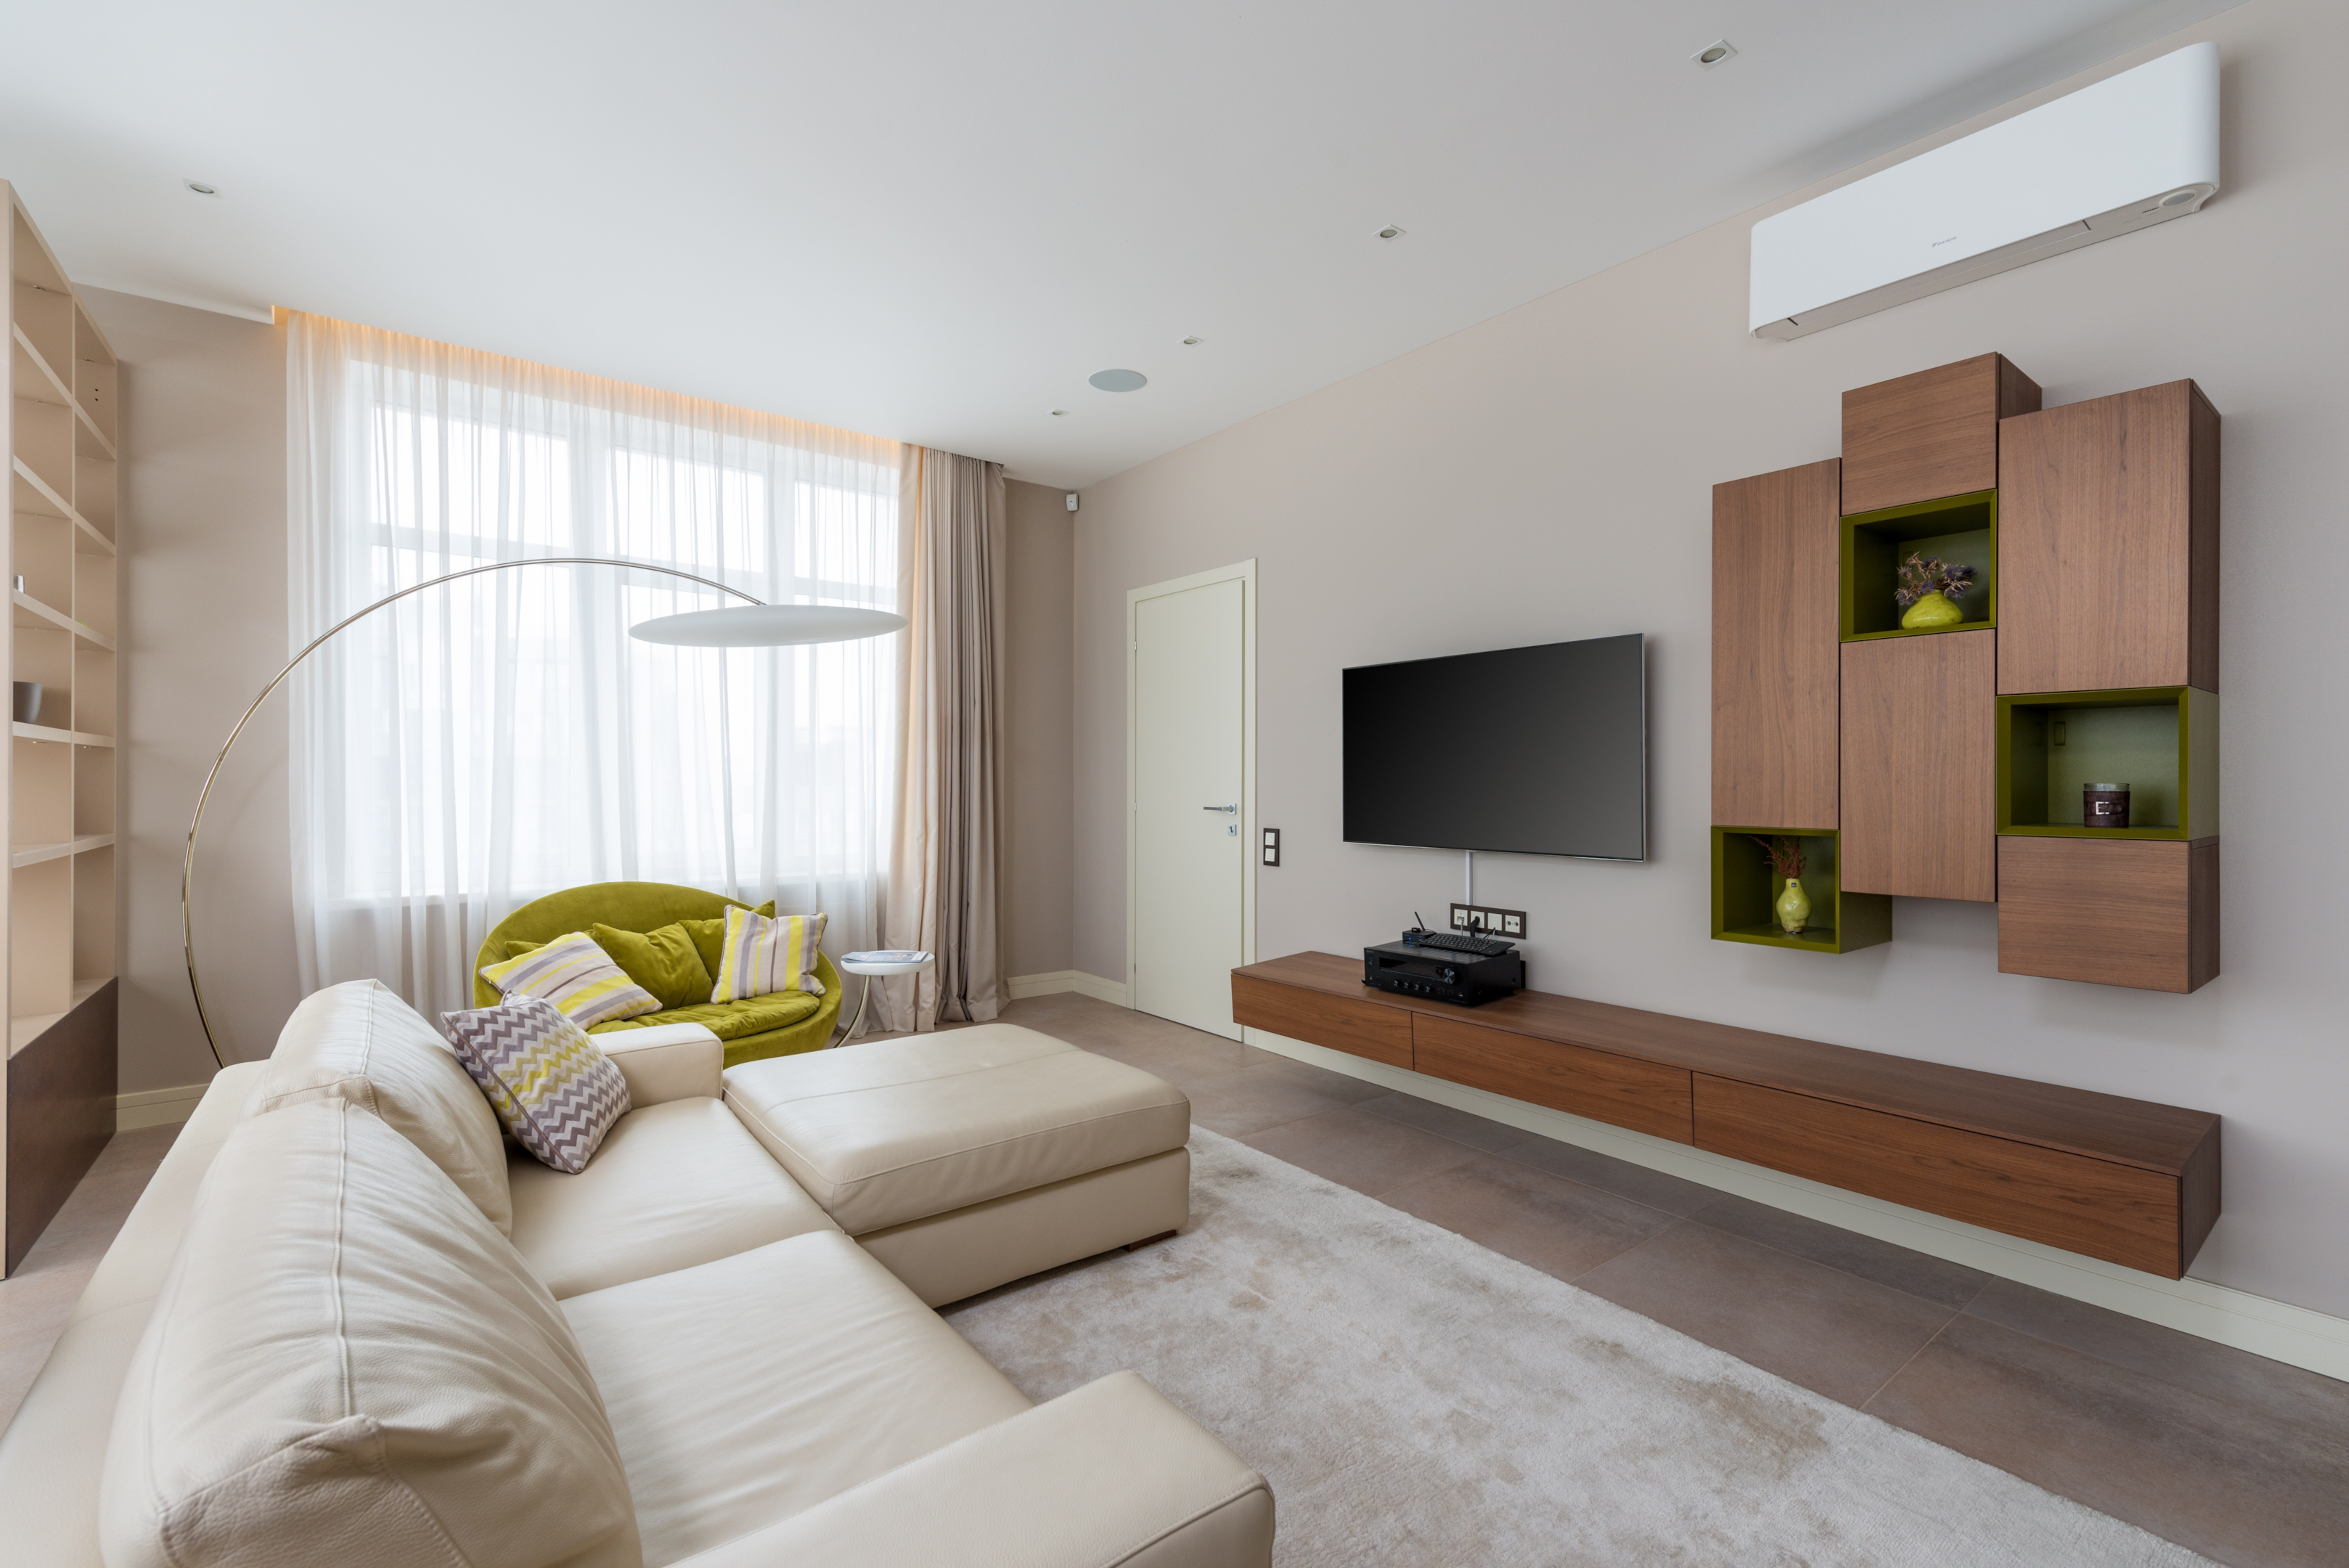 apartment living room ideas vertical